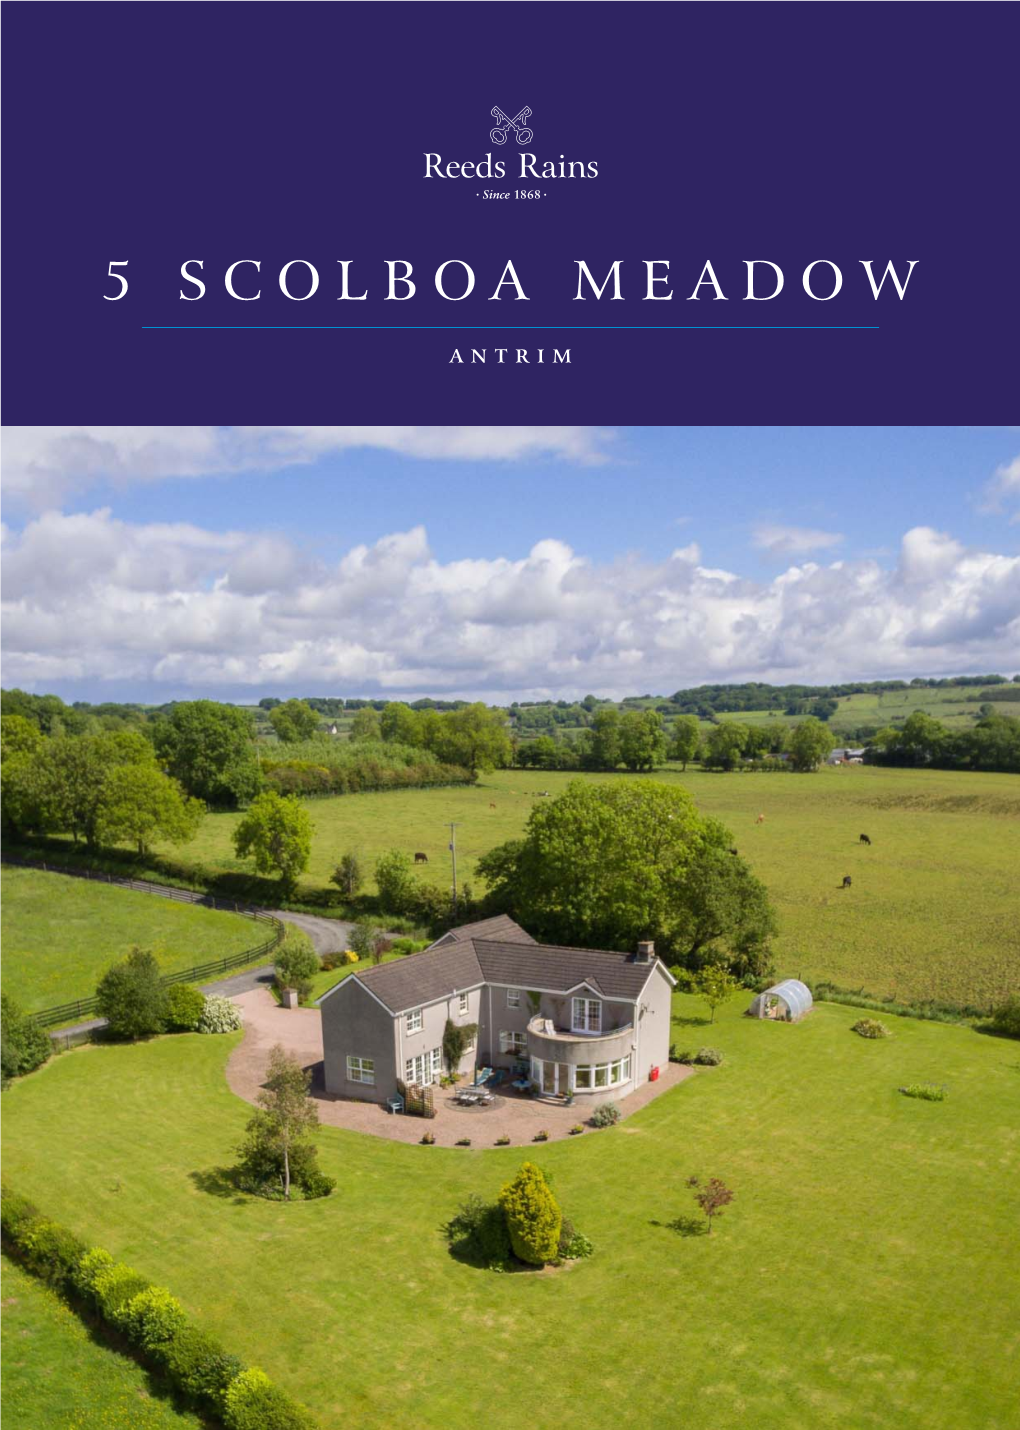 5 Scolboa Meadow